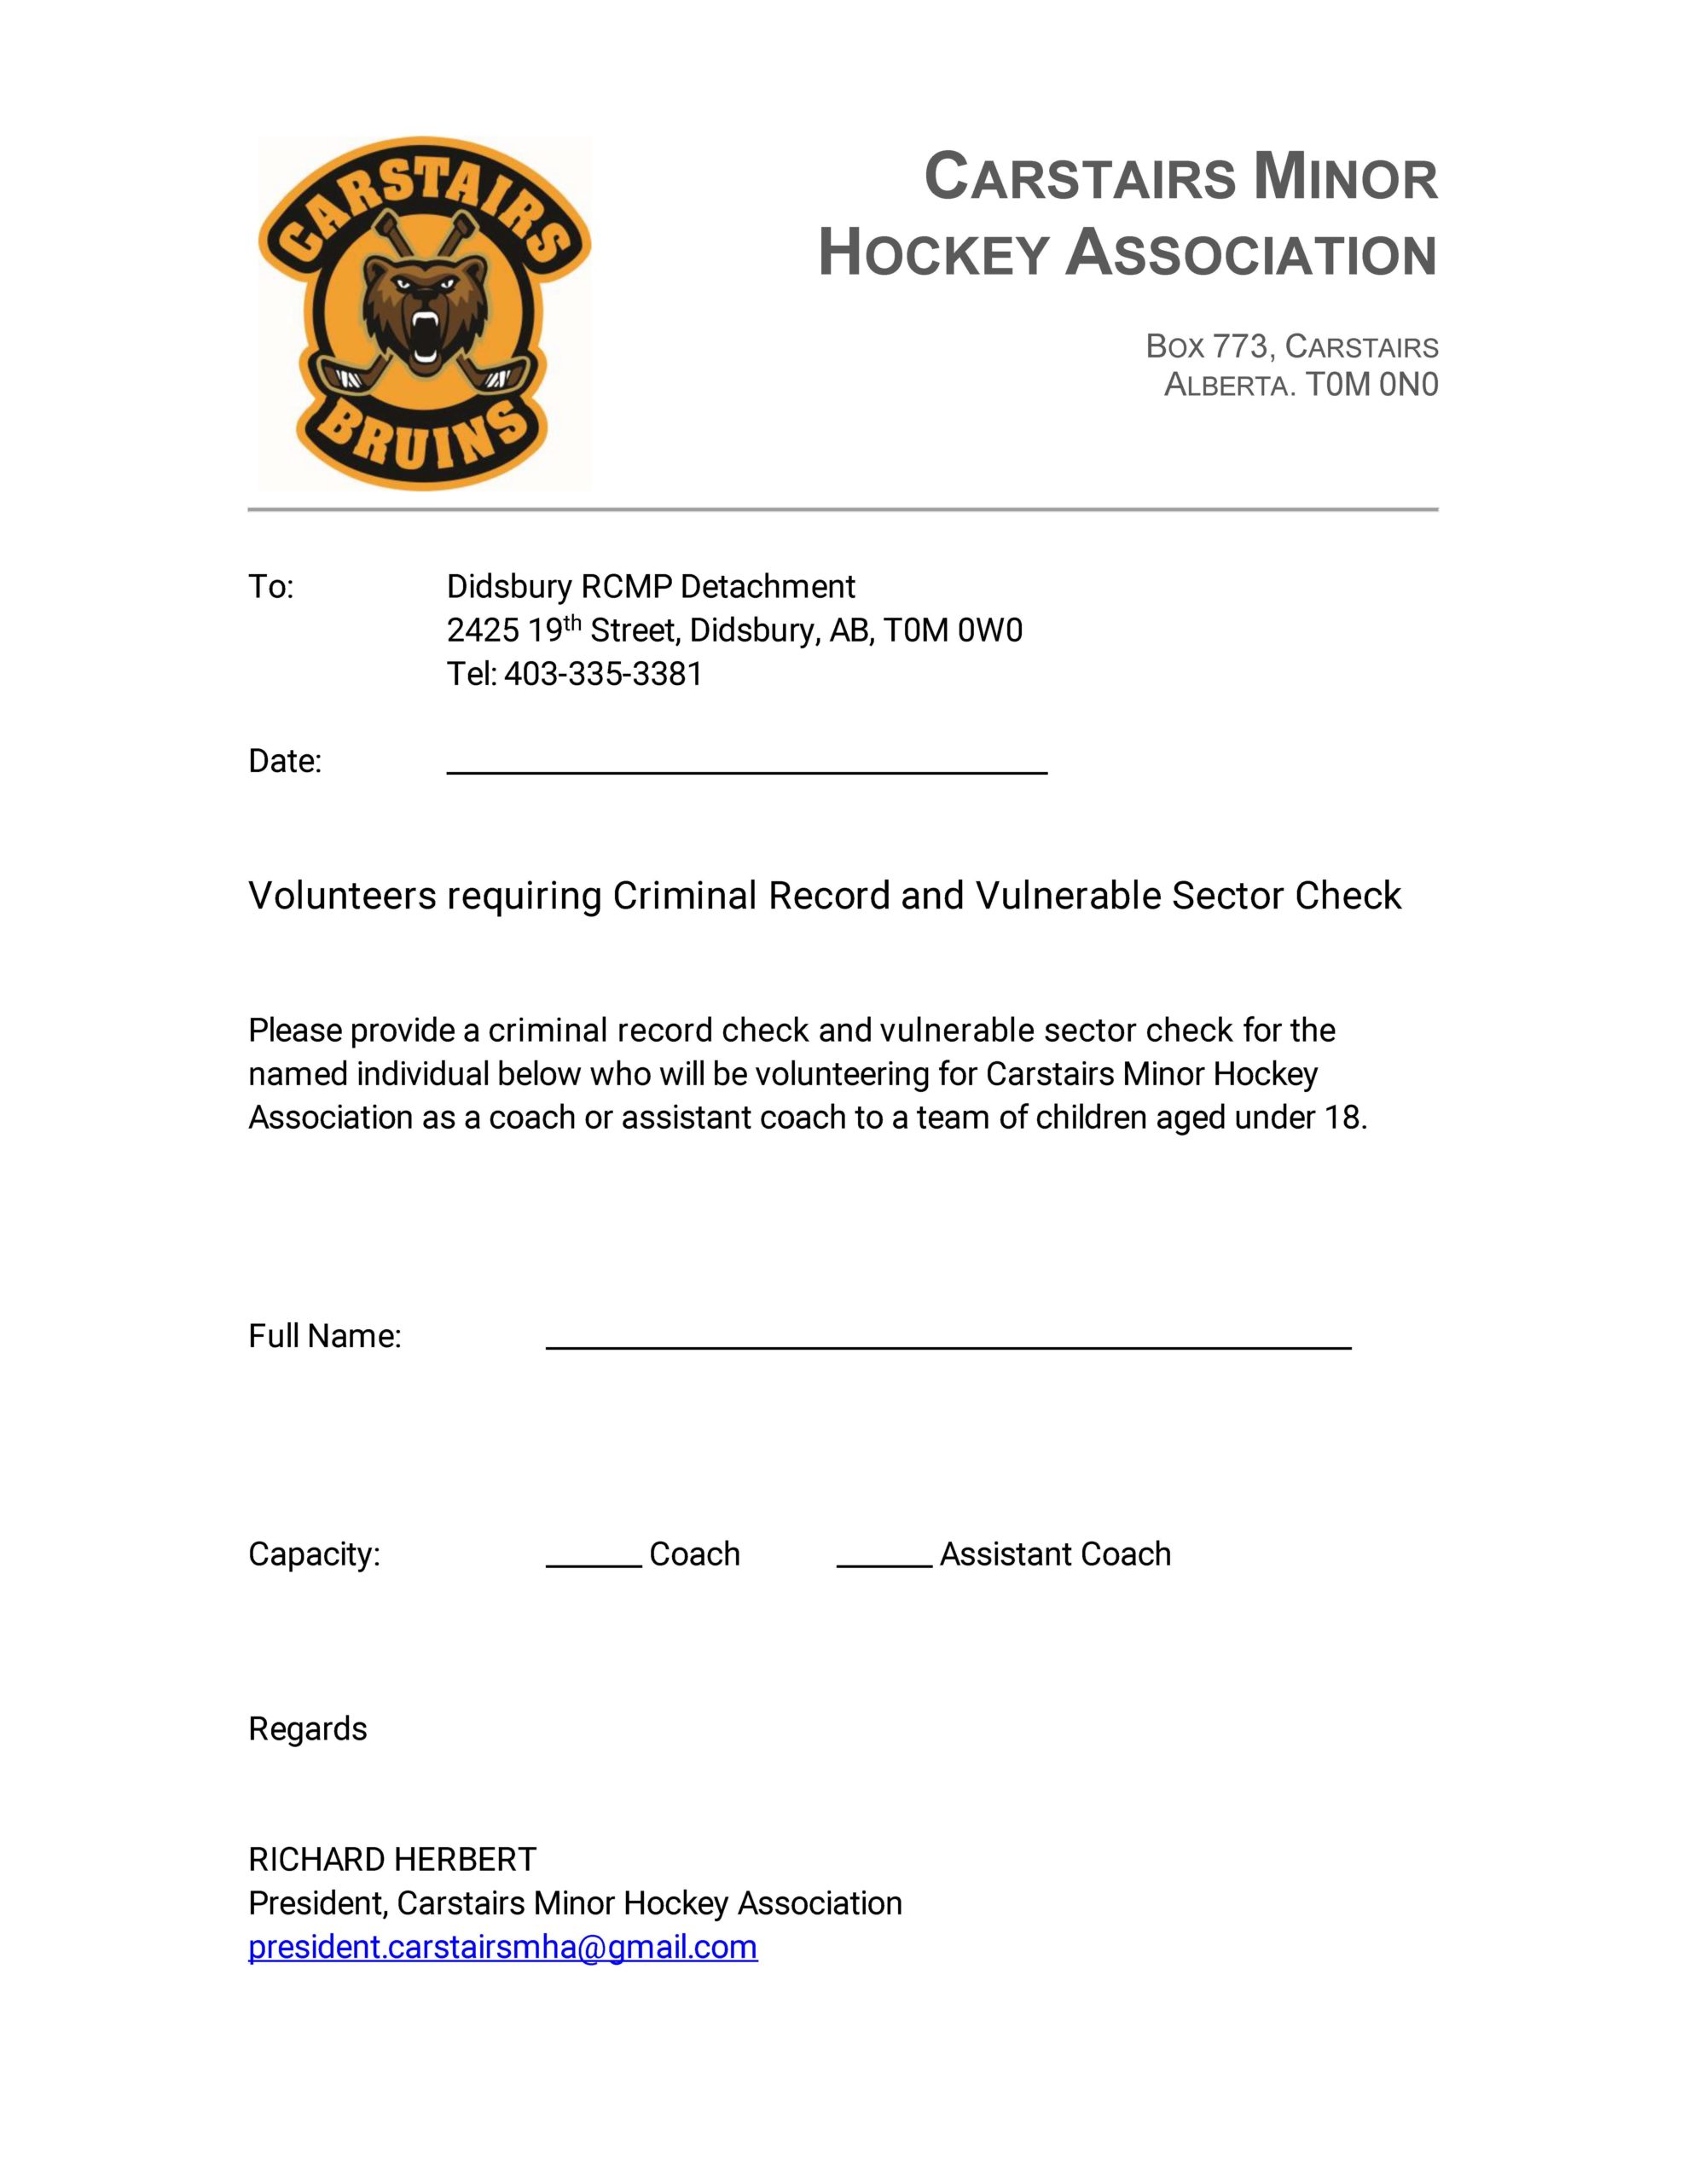 CMHA Letter for Criminal Record Check